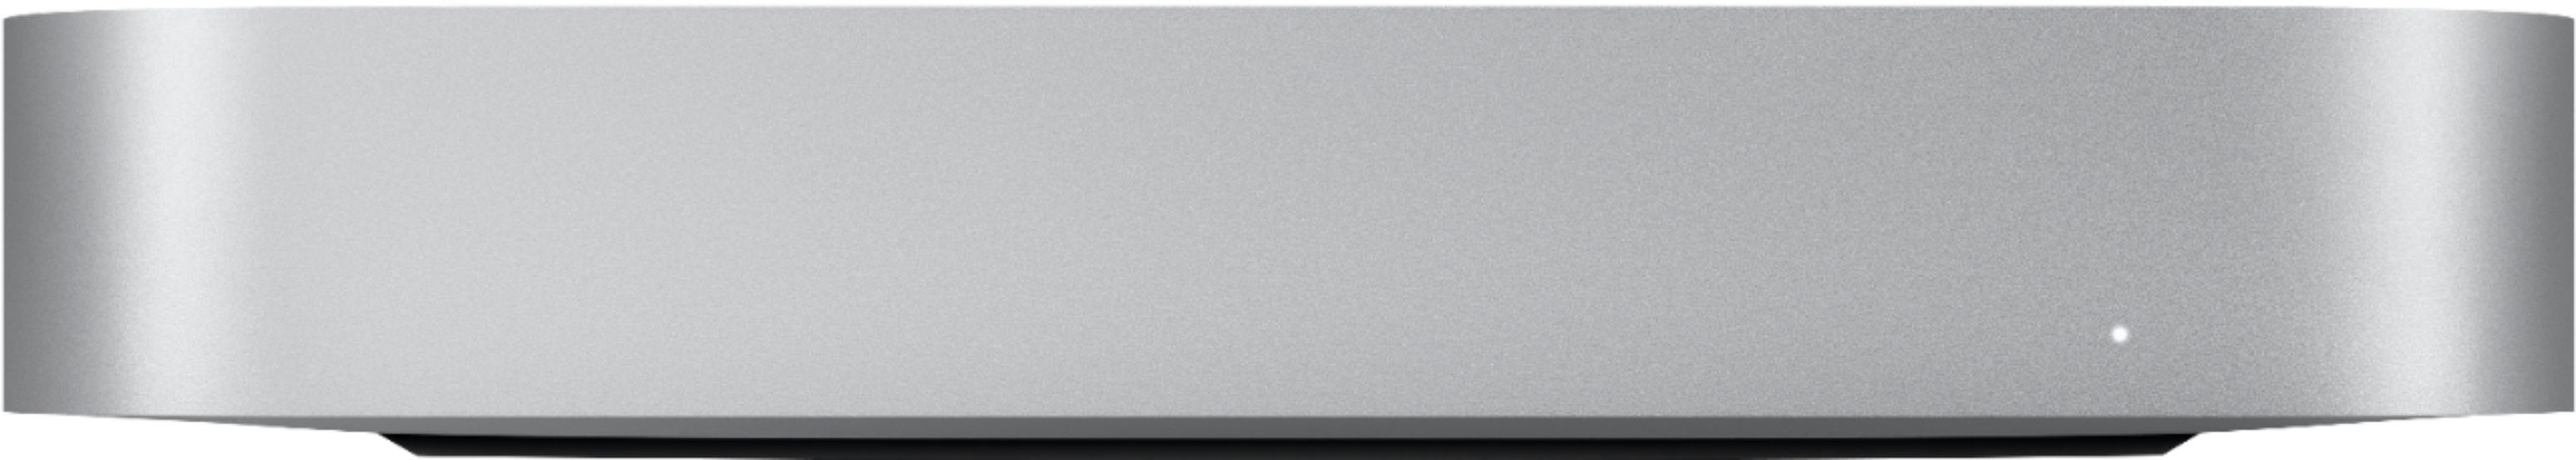 Best Buy: Mac mini Desktop Apple M1 chip 8GB Memory 256GB SSD